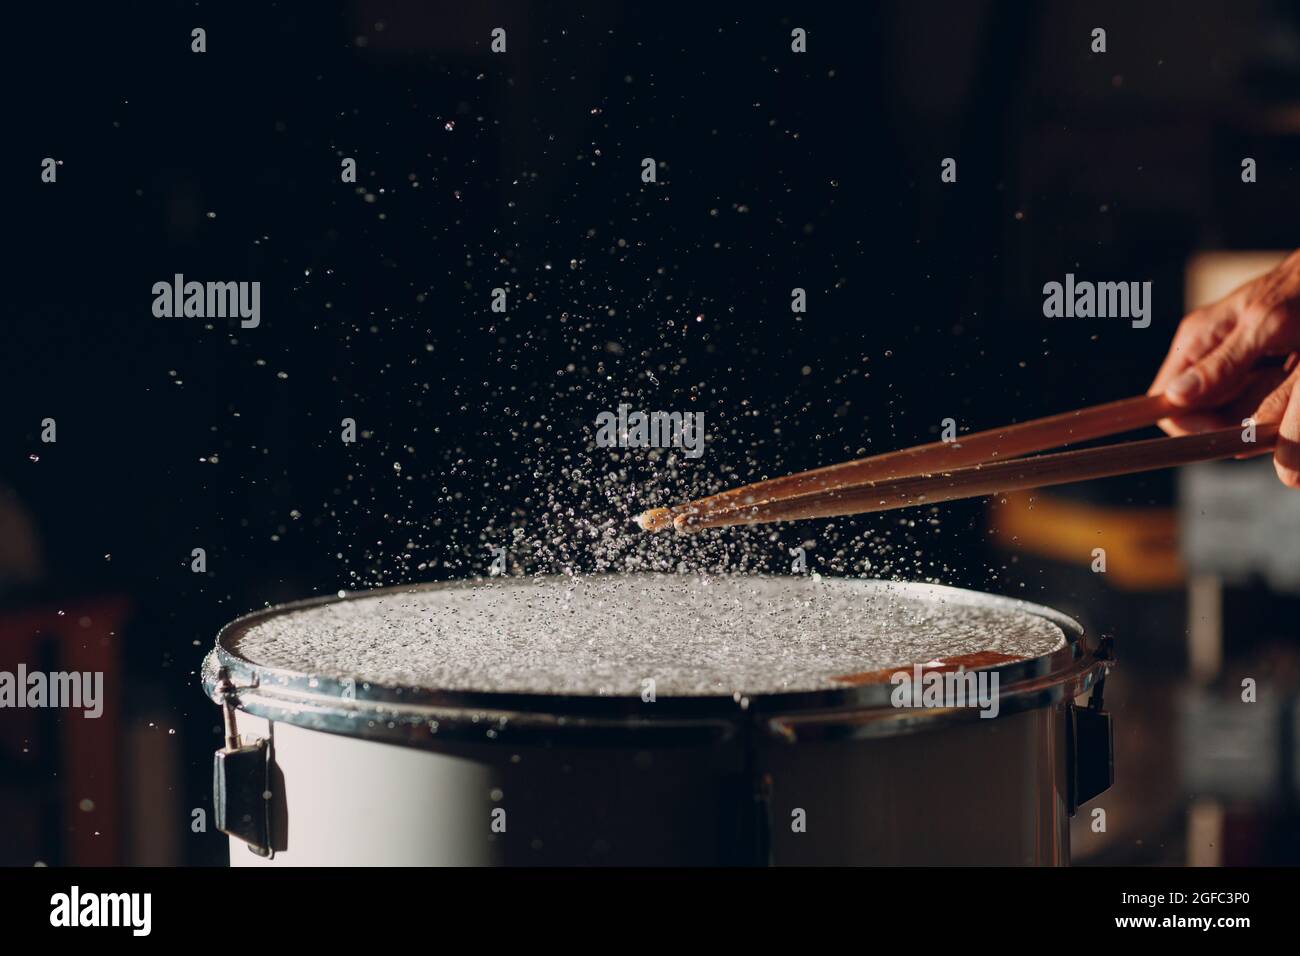 Close up drum sticks drumming hit beat rhythm on drum surface with splash water drops Stock Photo